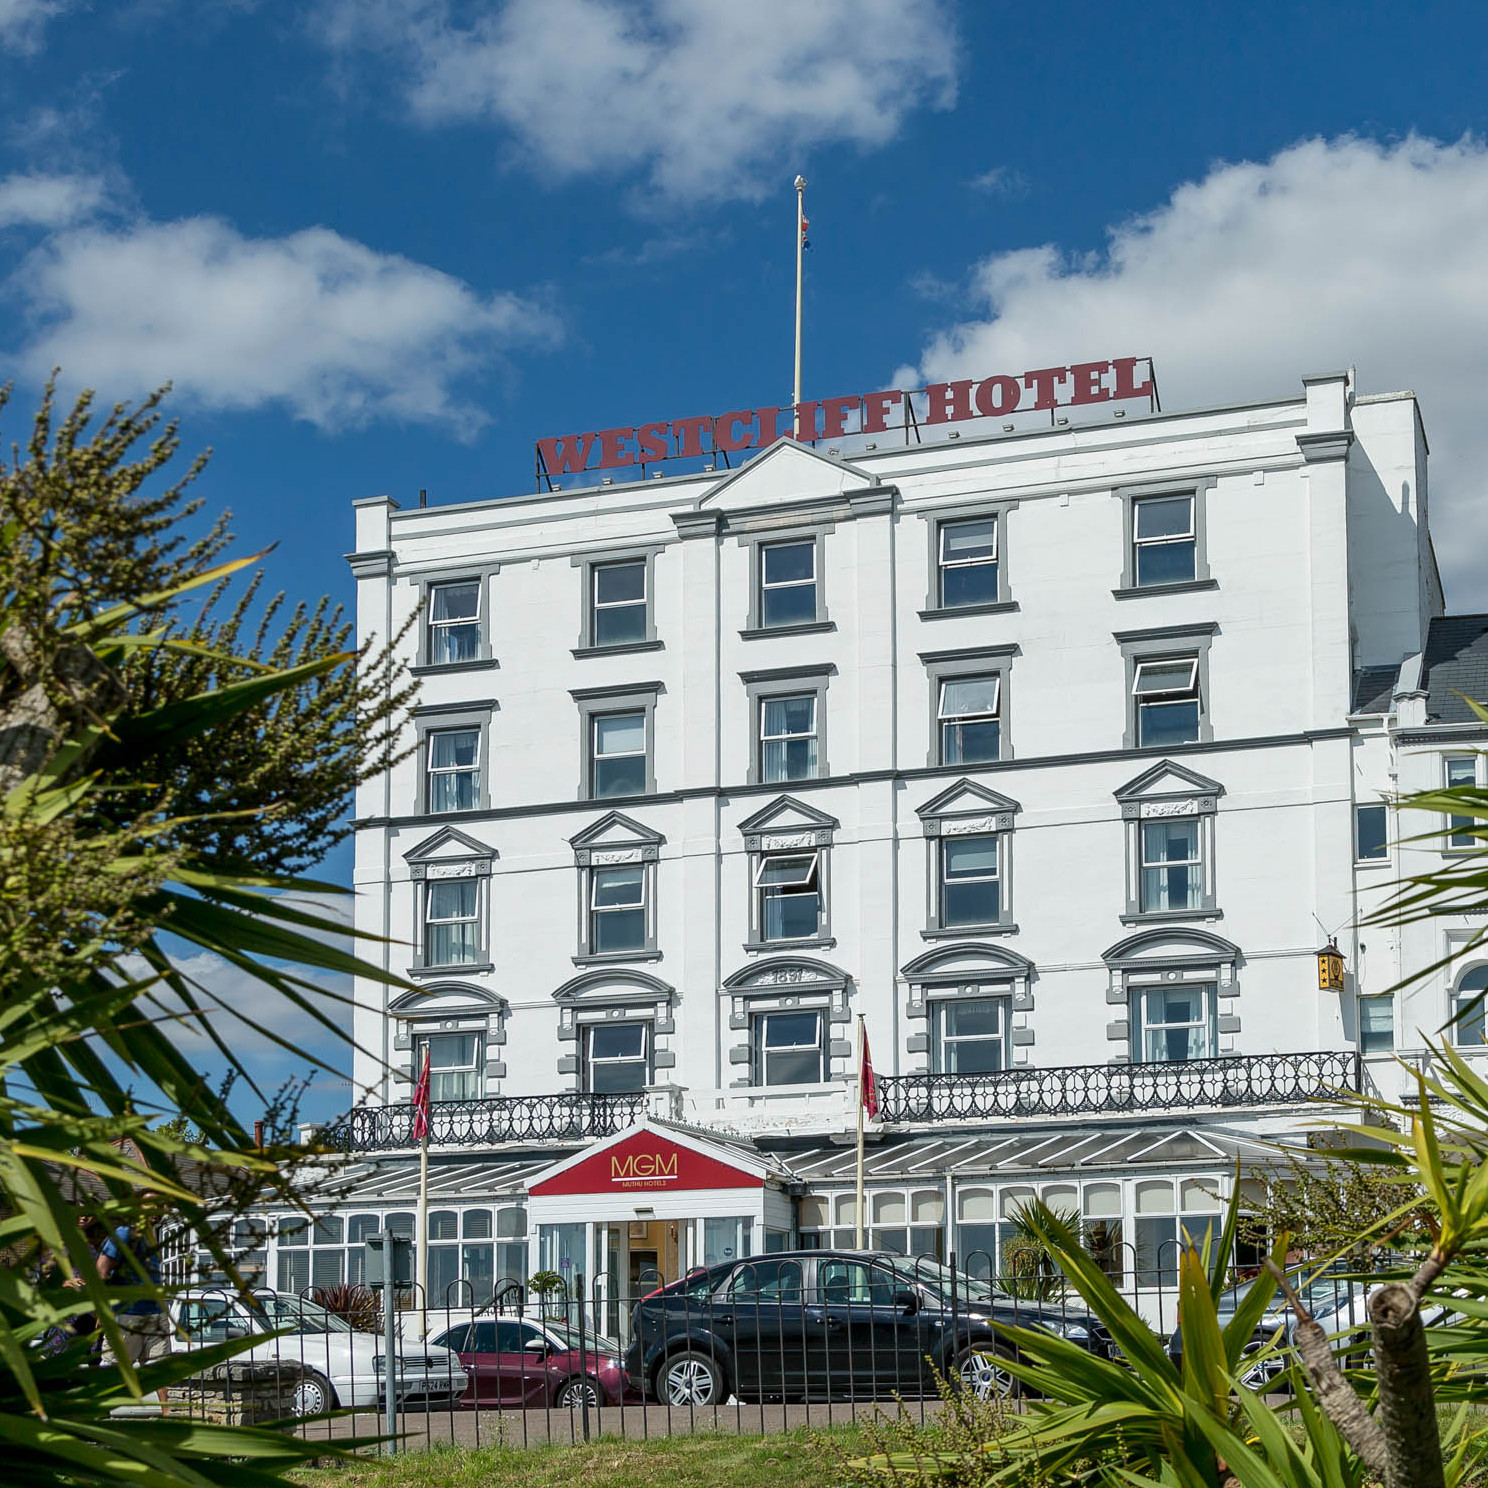 Muthu Westcliff Hotel, Southend on Sea